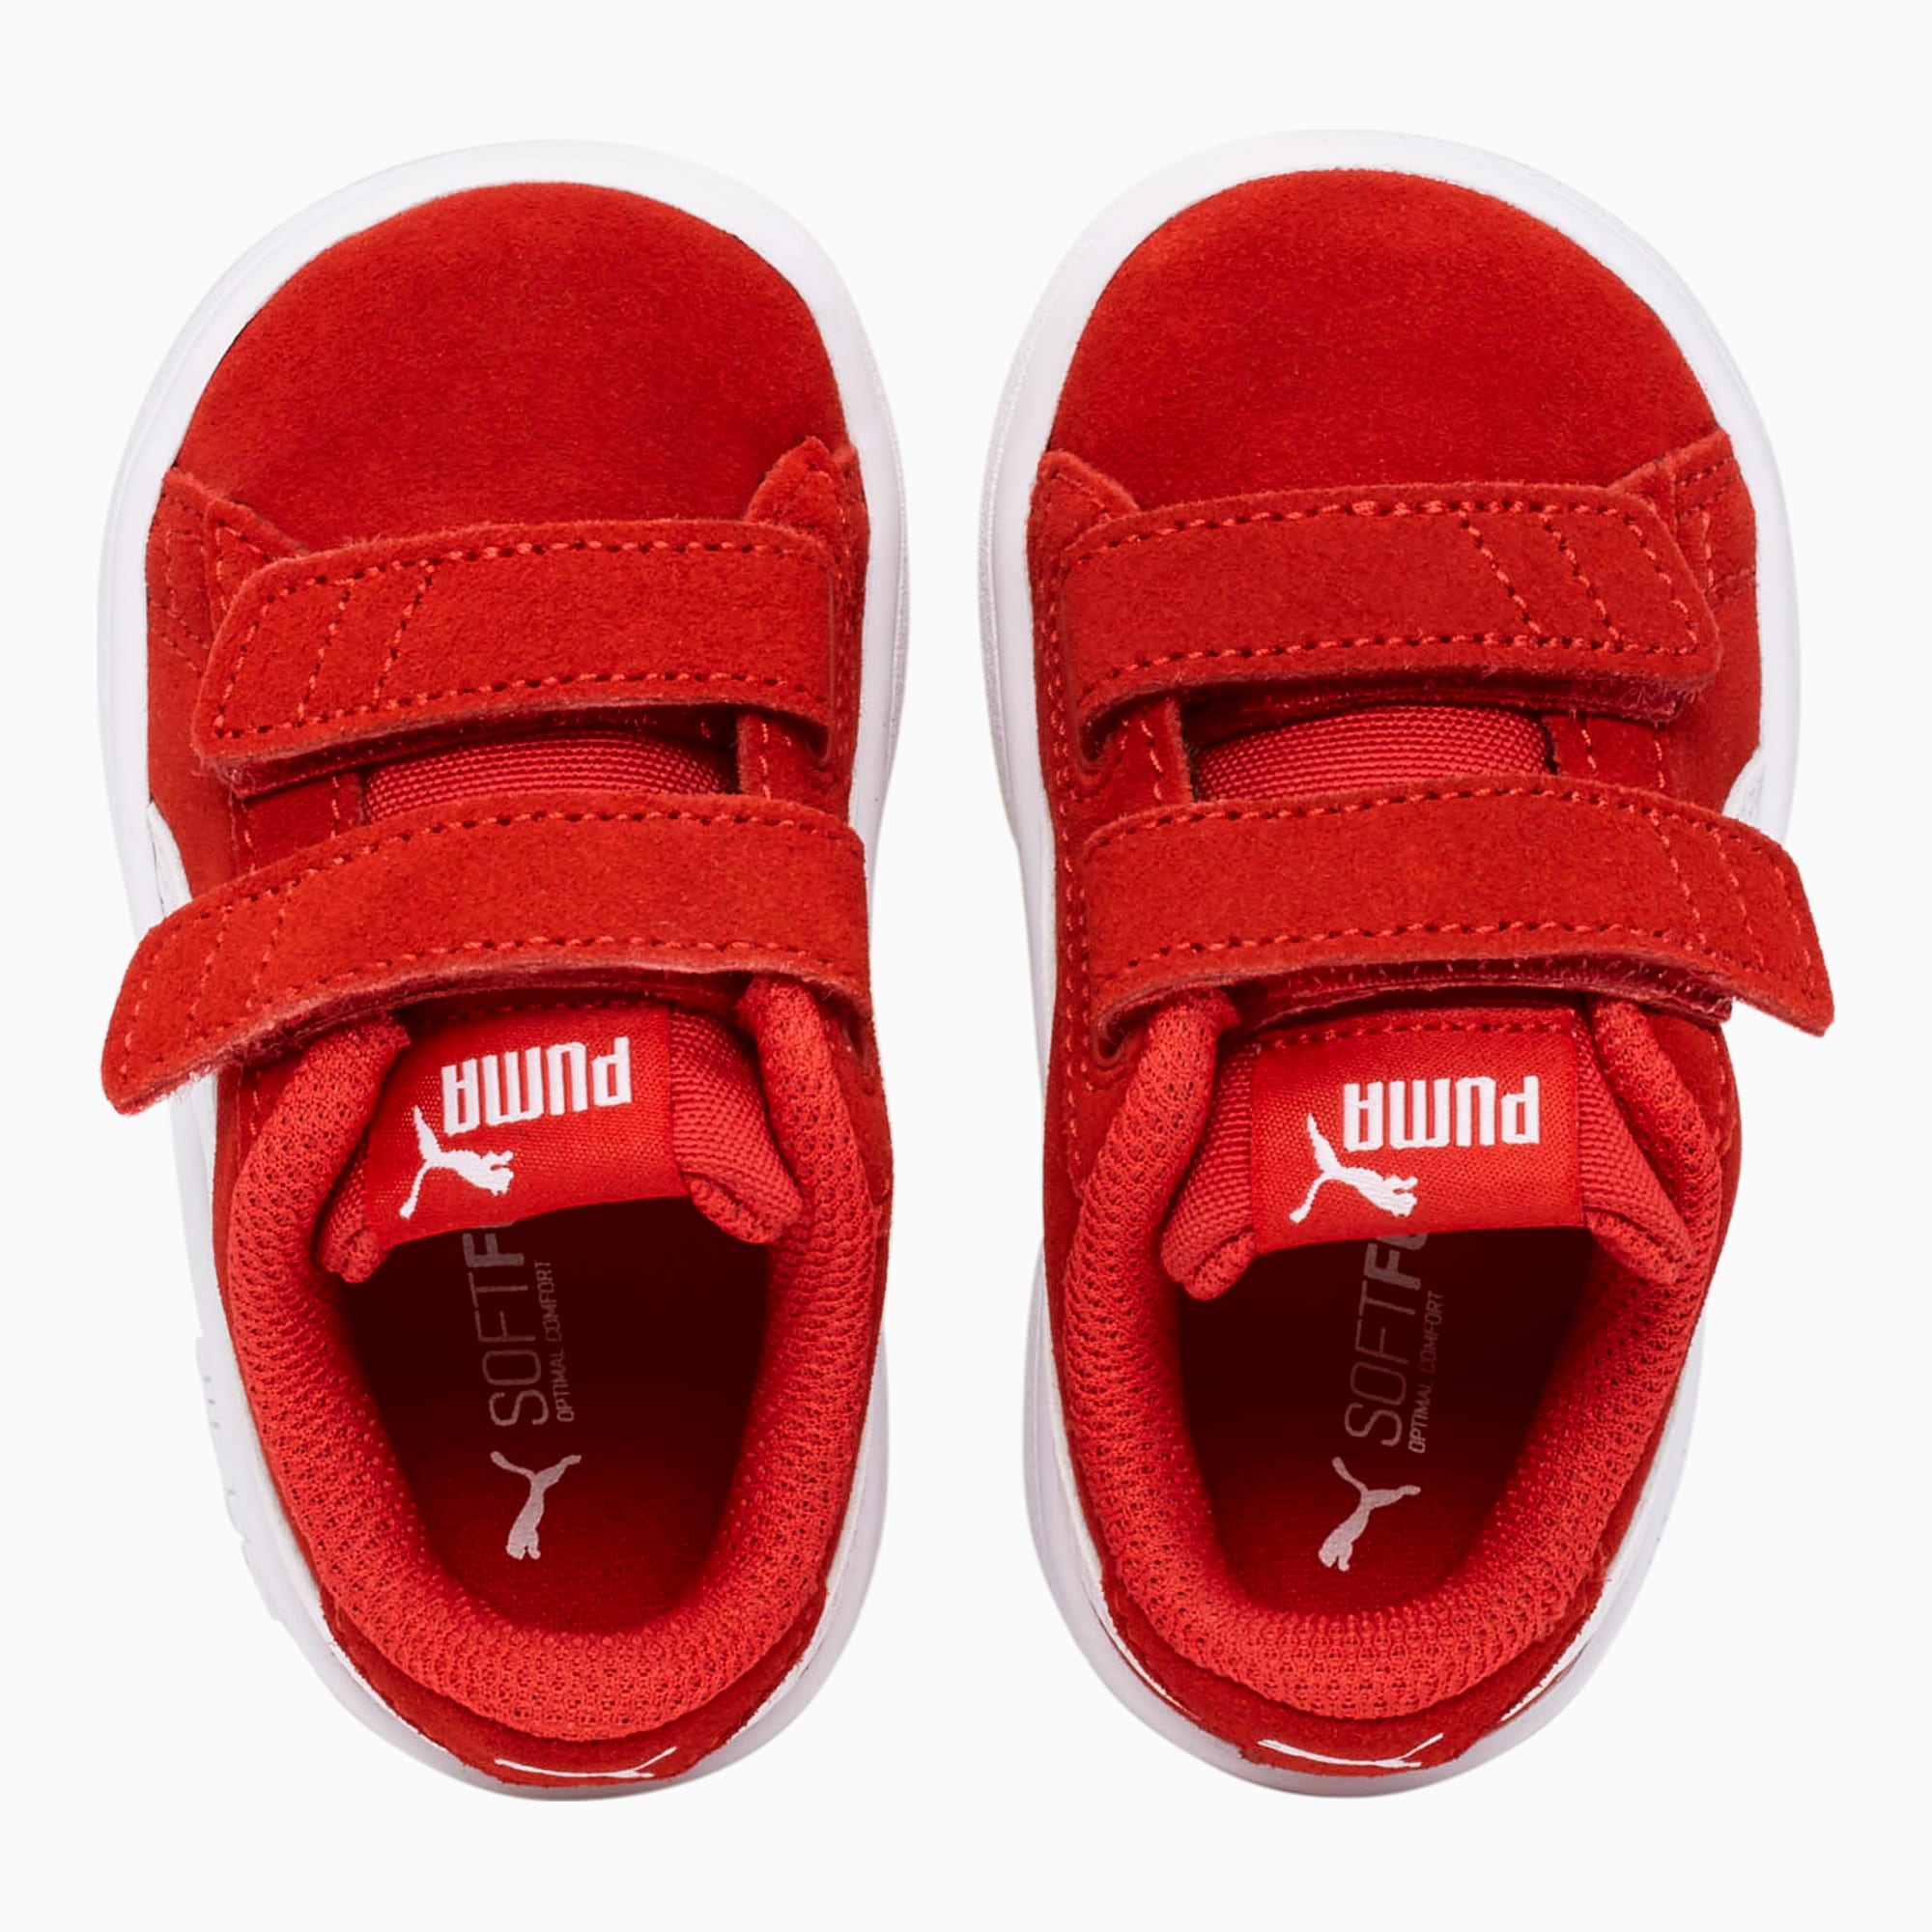  PUMA Smash v2 Suede Preschool Sneakers (High Risk Red/Puma  White)(11 M US Little Kid)